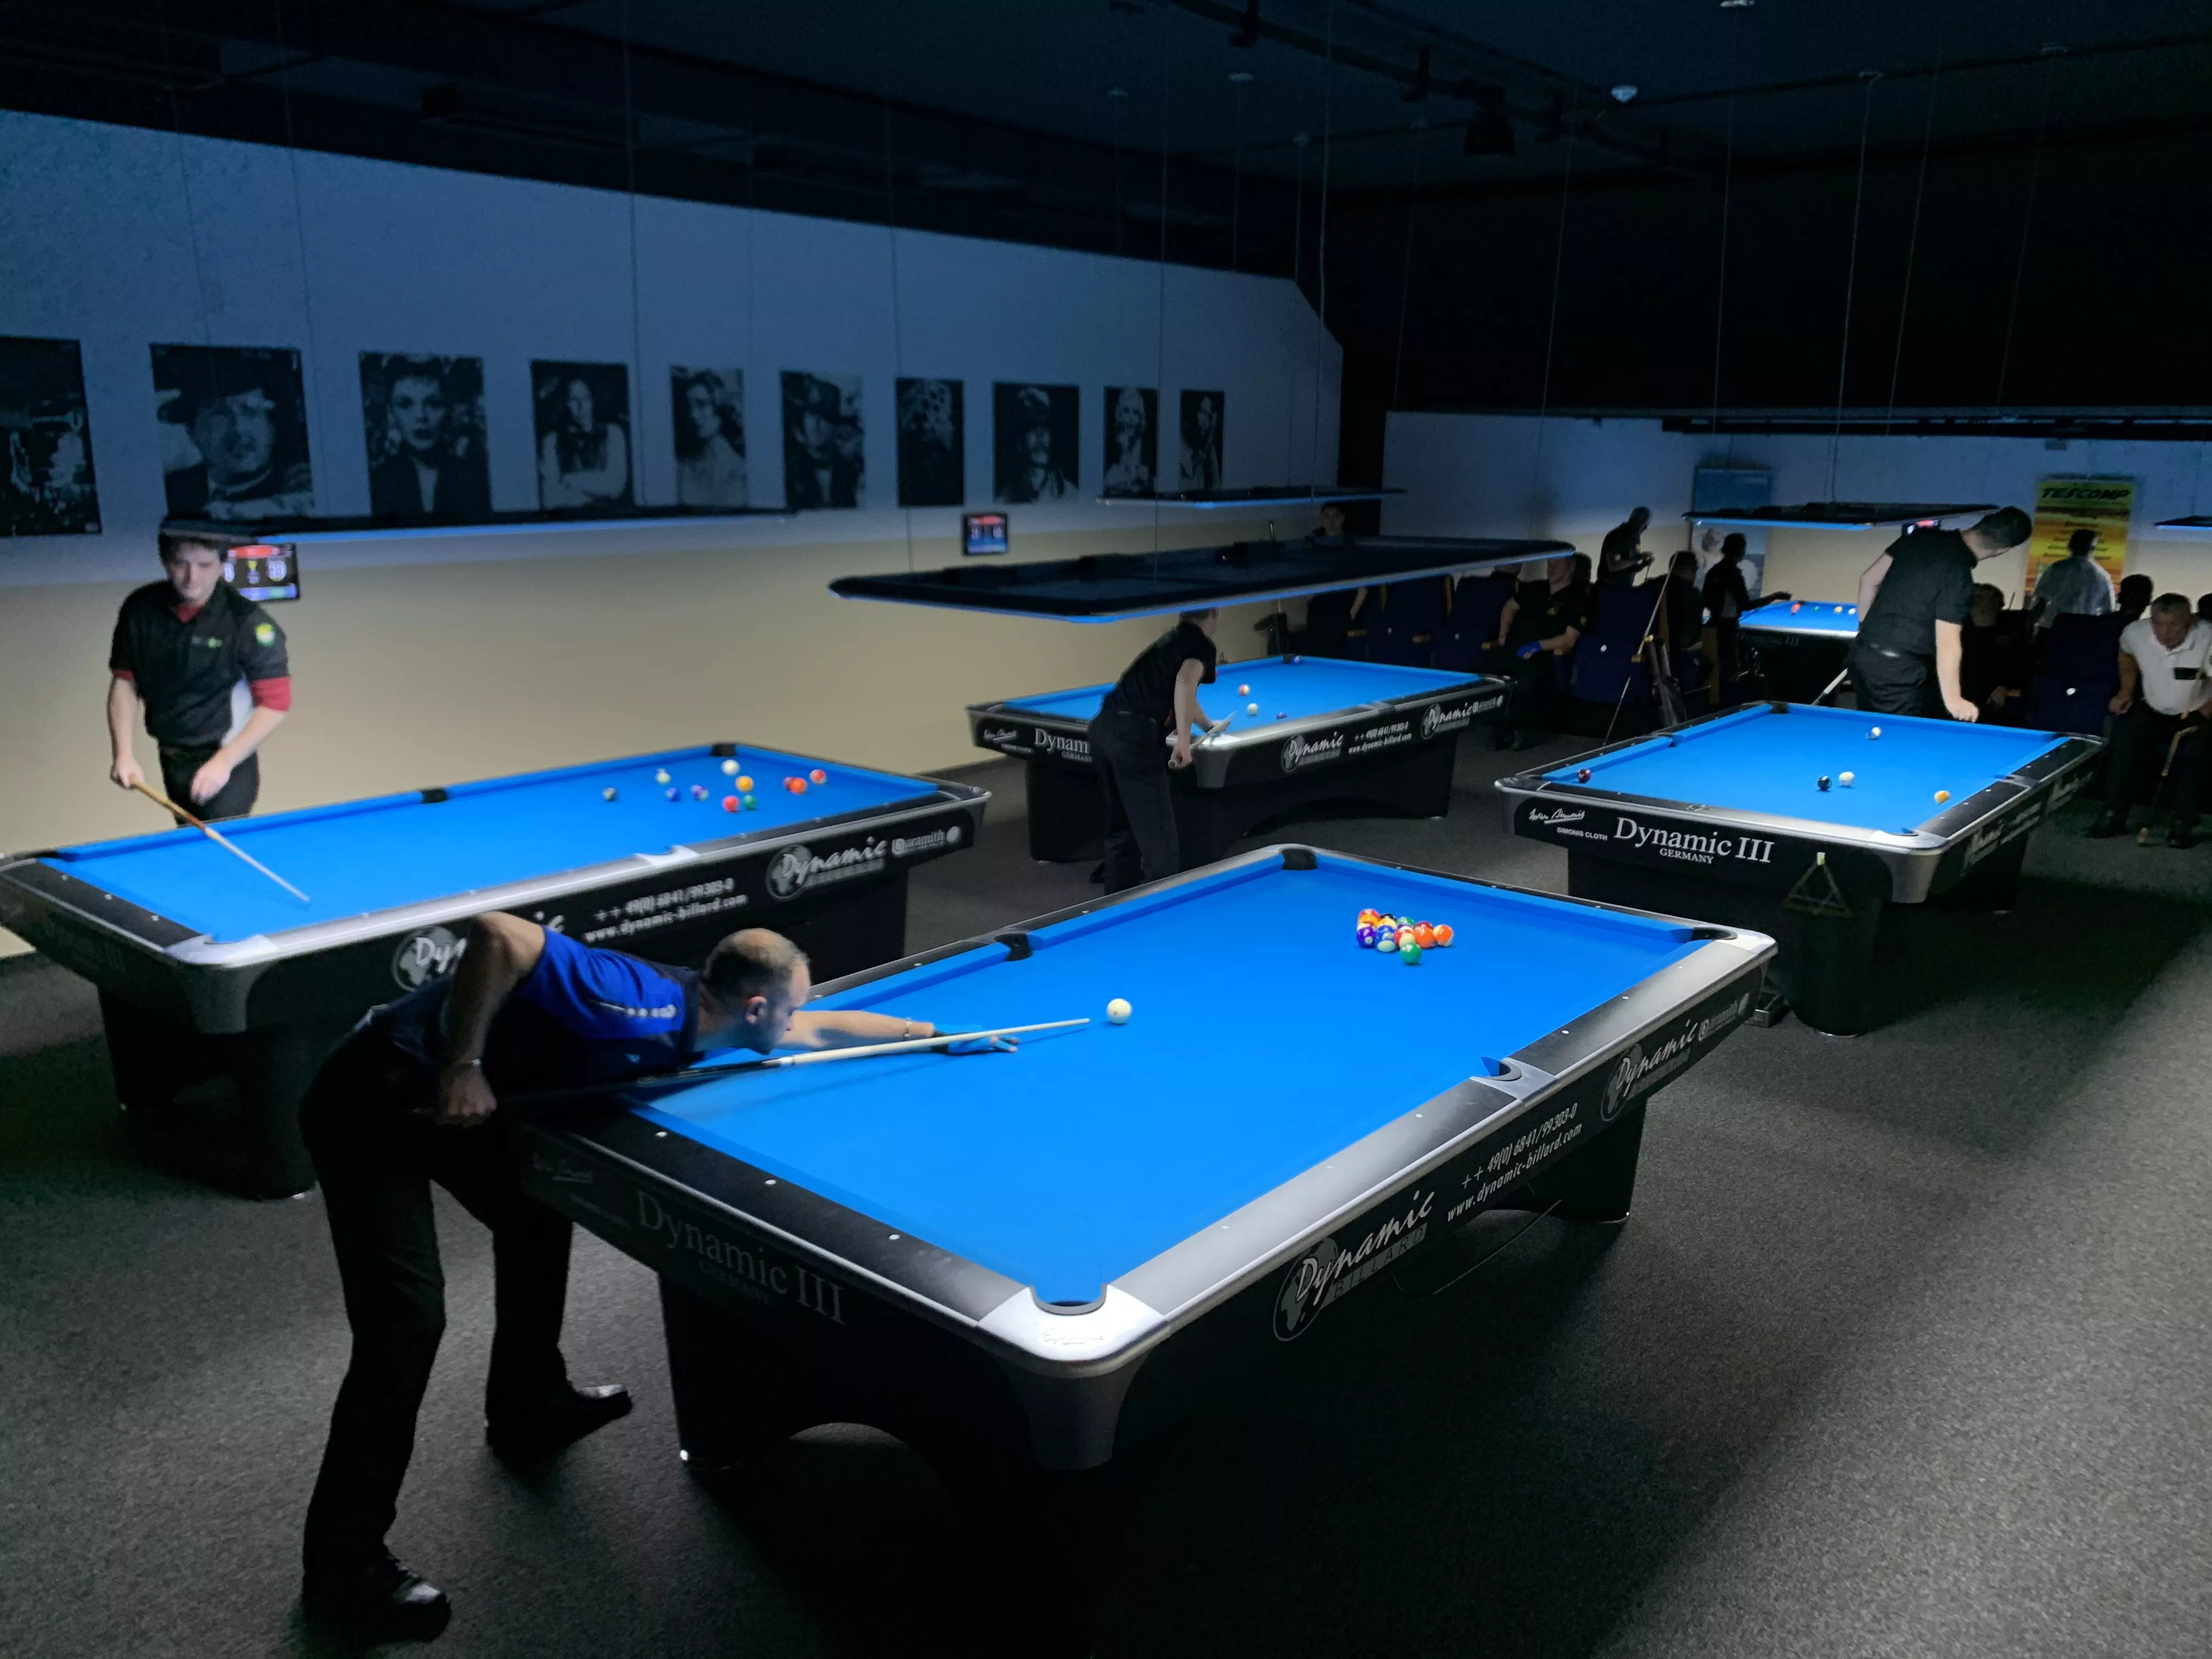 Billardtempel Linz in Austria, Europe | Billiards - Rated 0.7